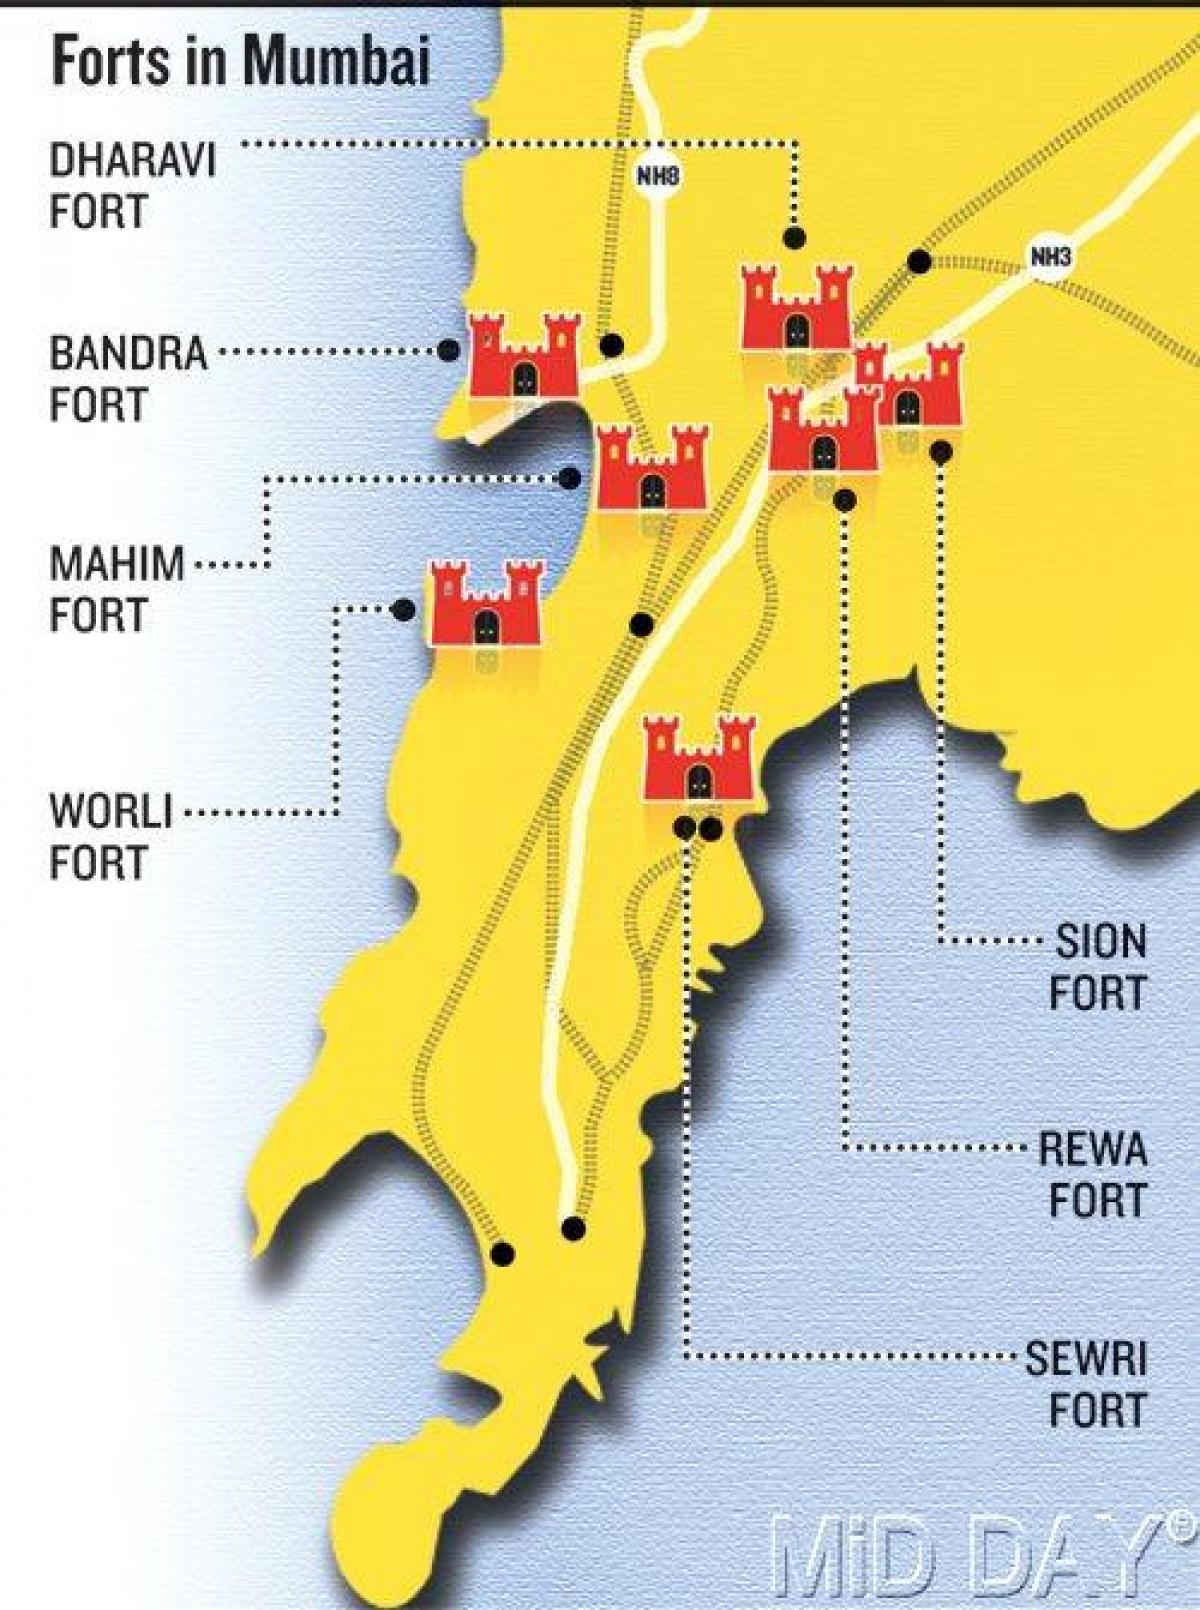 Mumbai fort ala kaart